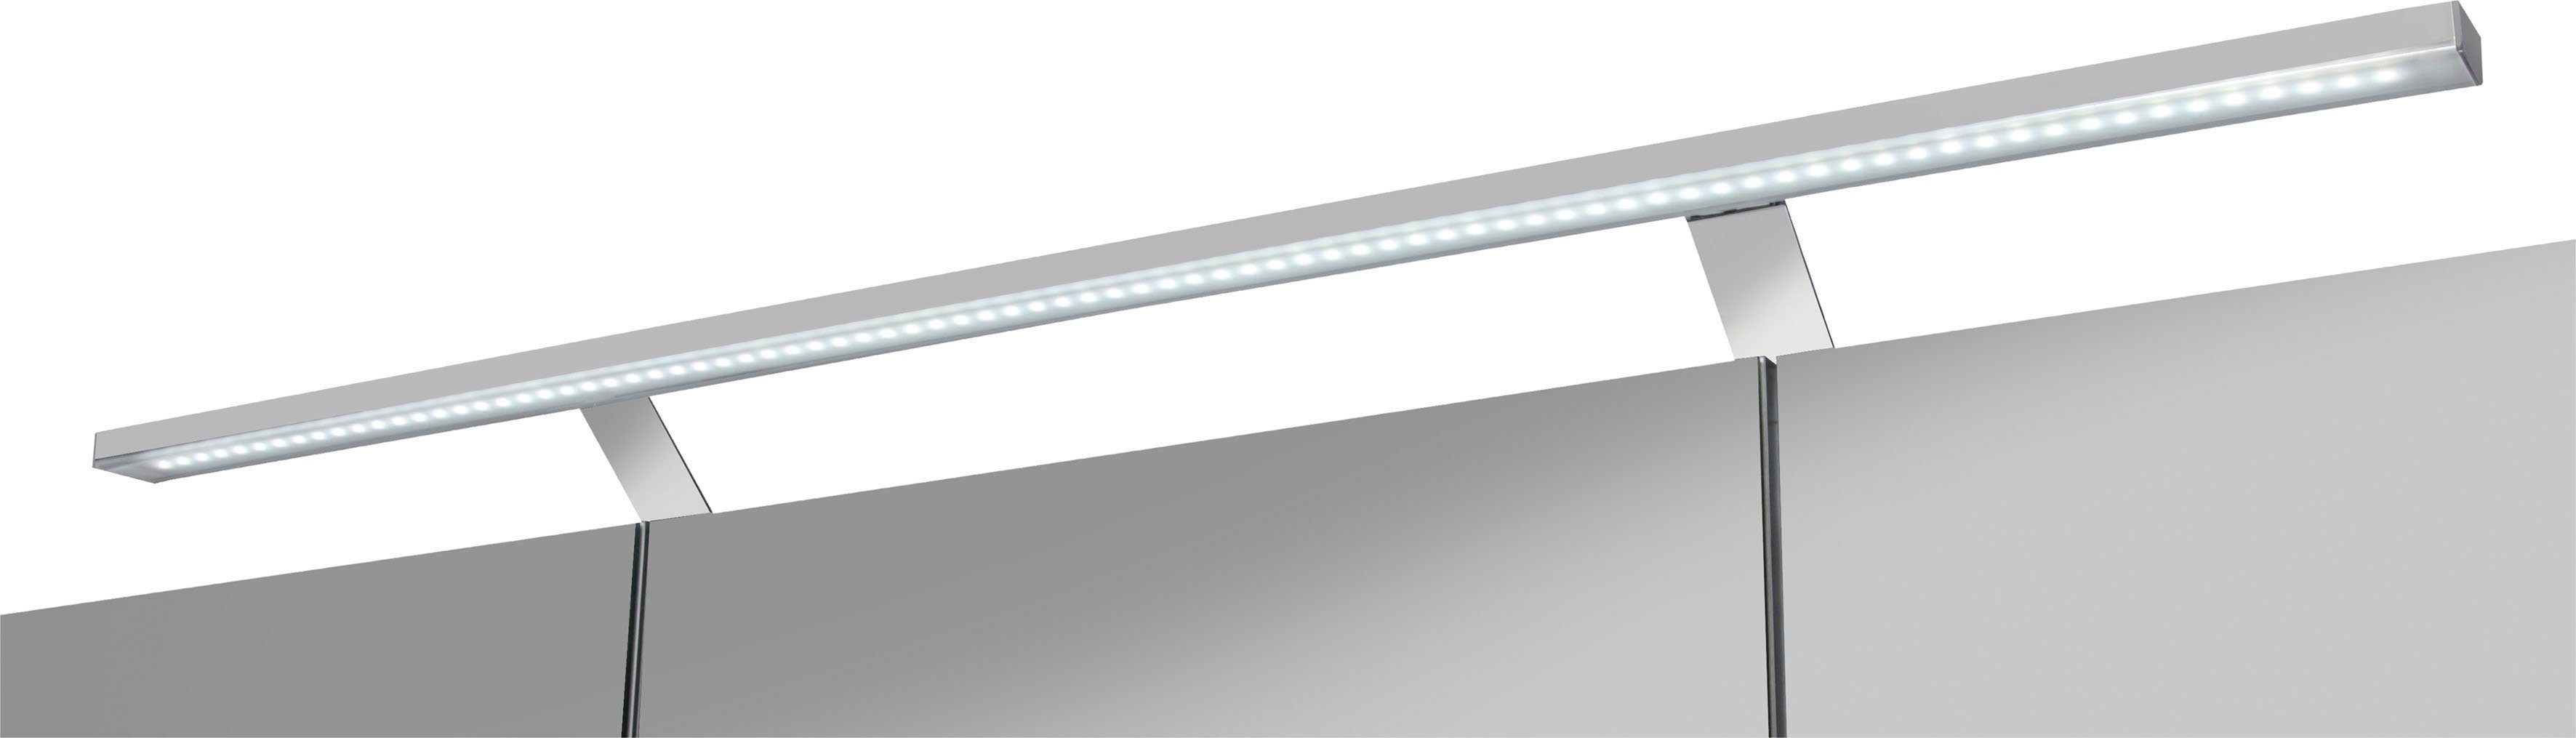 welltime Spiegelschrank Torino Breite 120 cm, LED-Beleuchtung, Schalter-/Steckdosenbox | 3-türig, basaltgrau basaltgrau